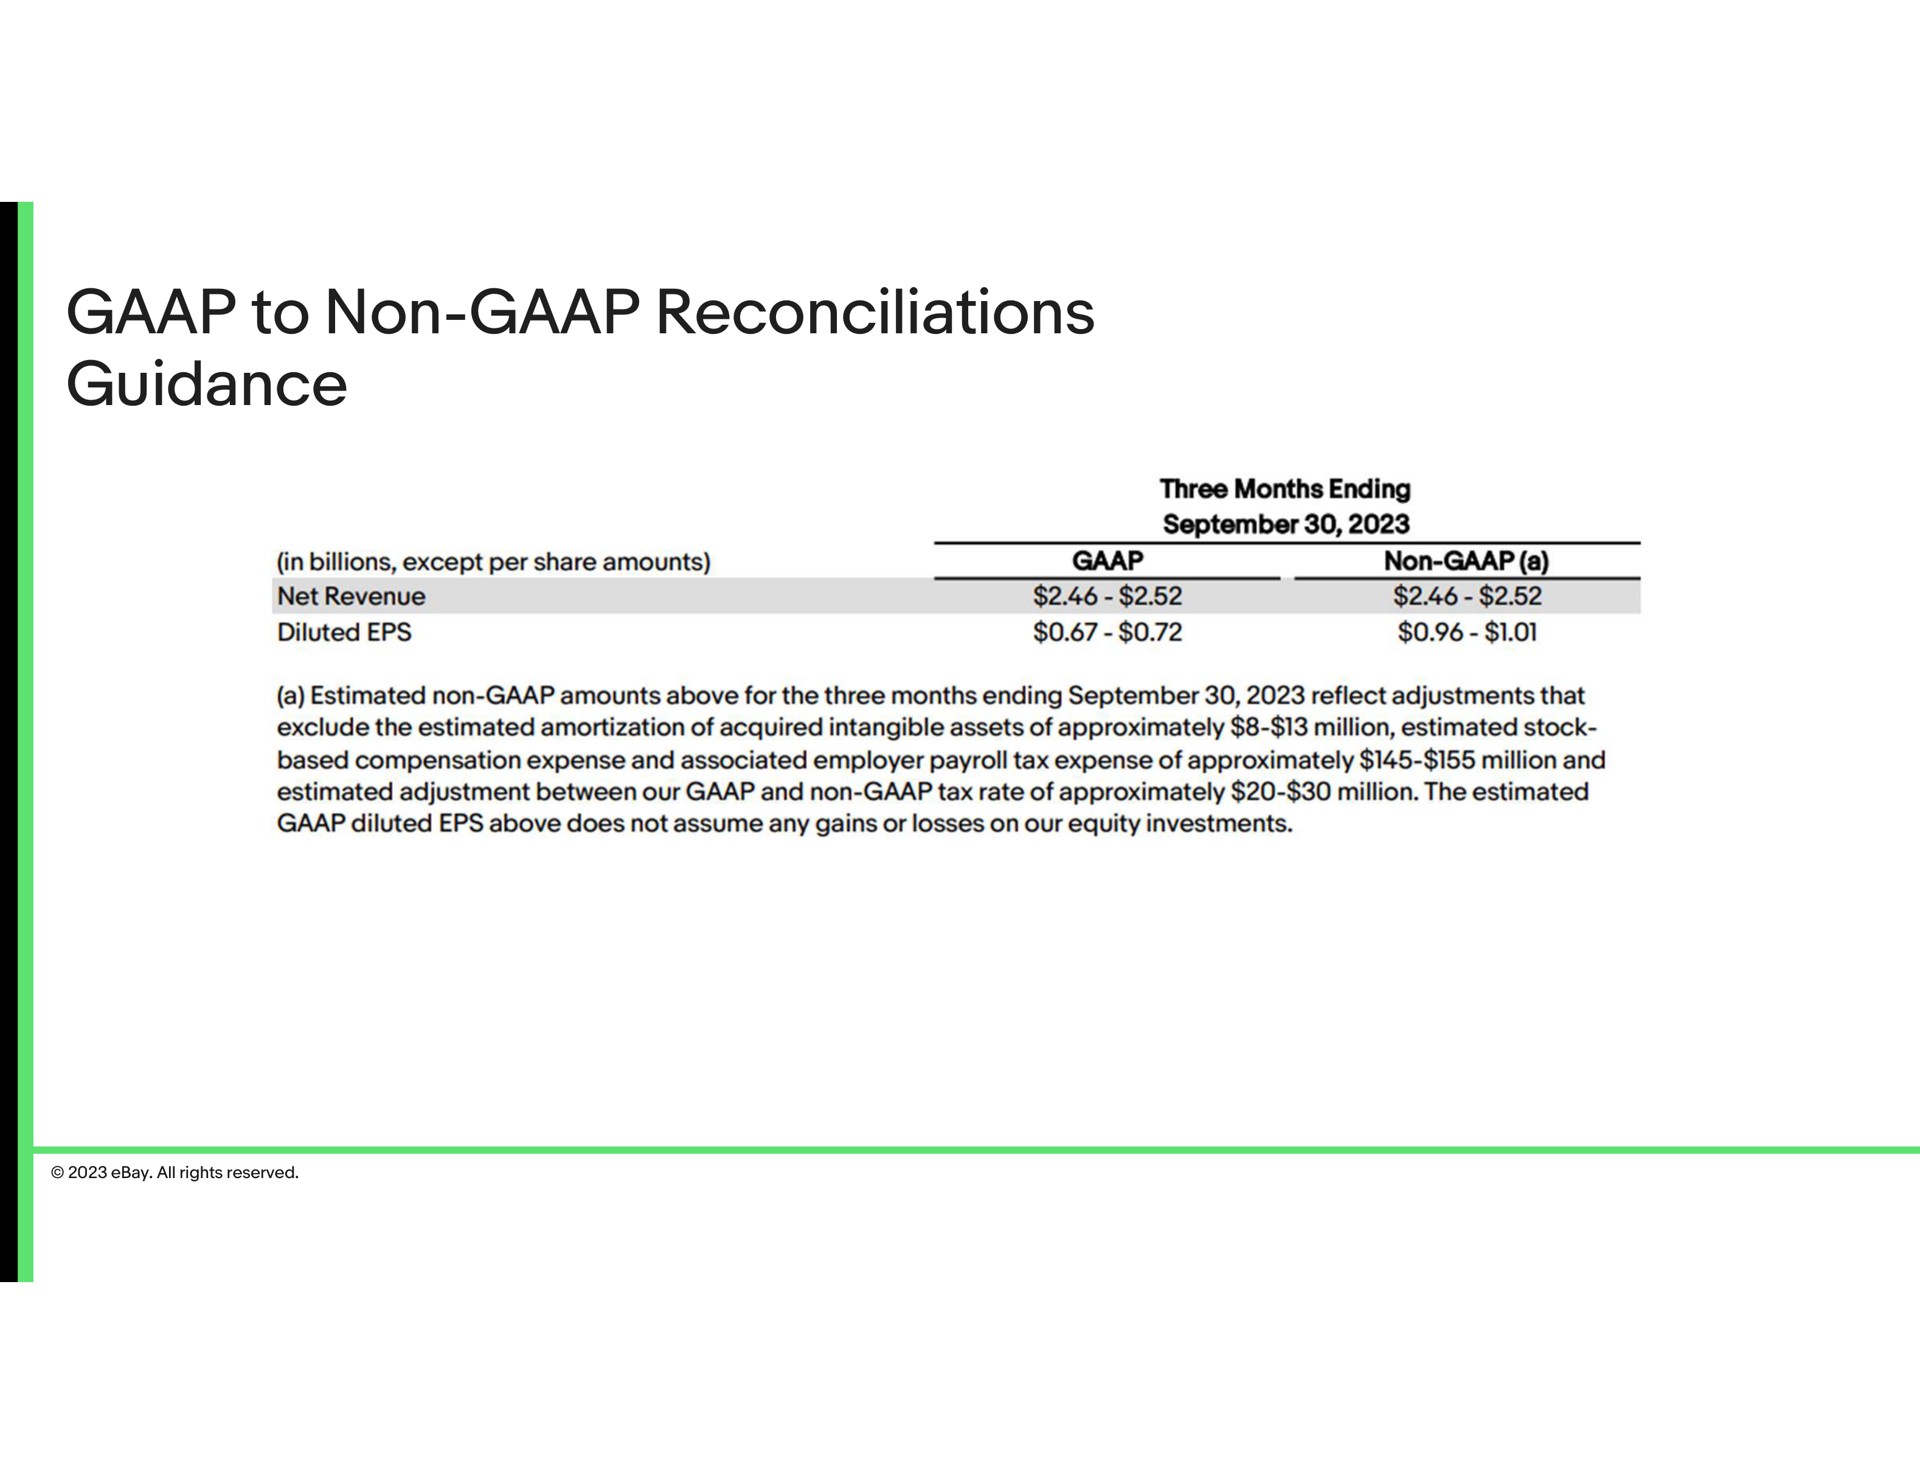 to non reconciliations guidance | eBay